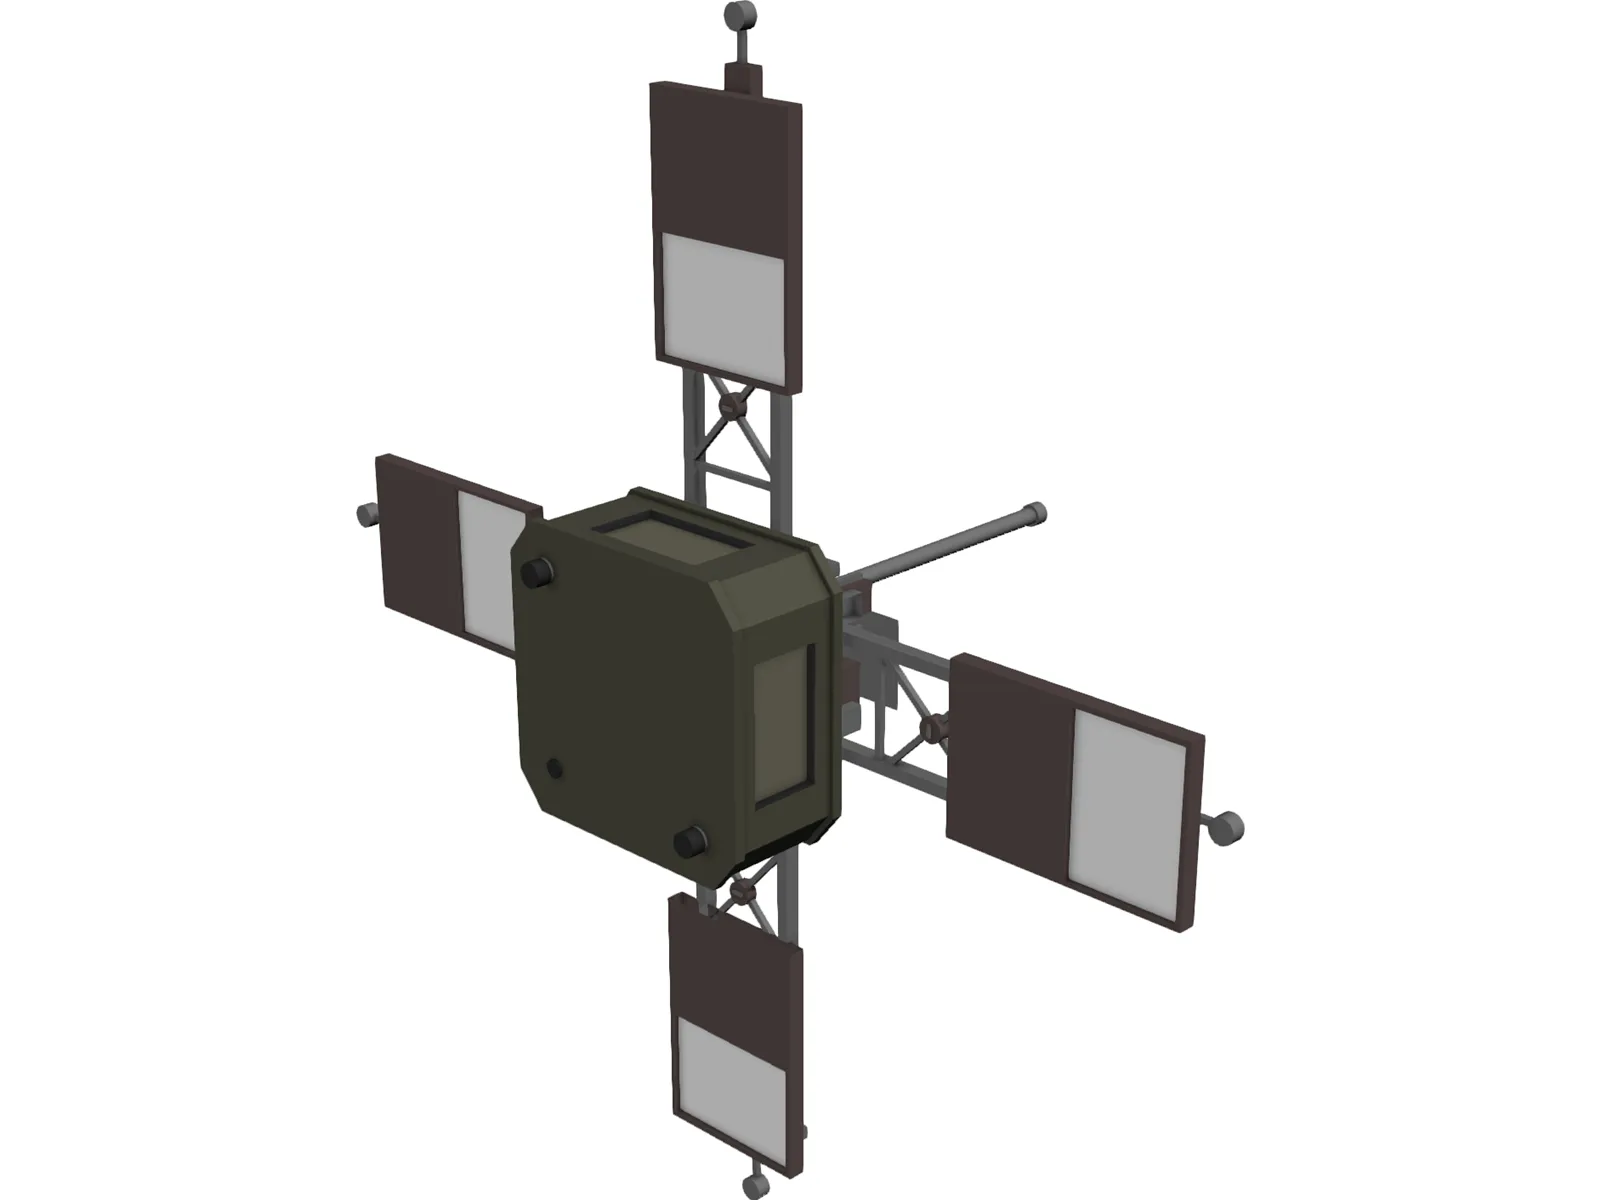 Mariner 1 Space Probe 3D Model